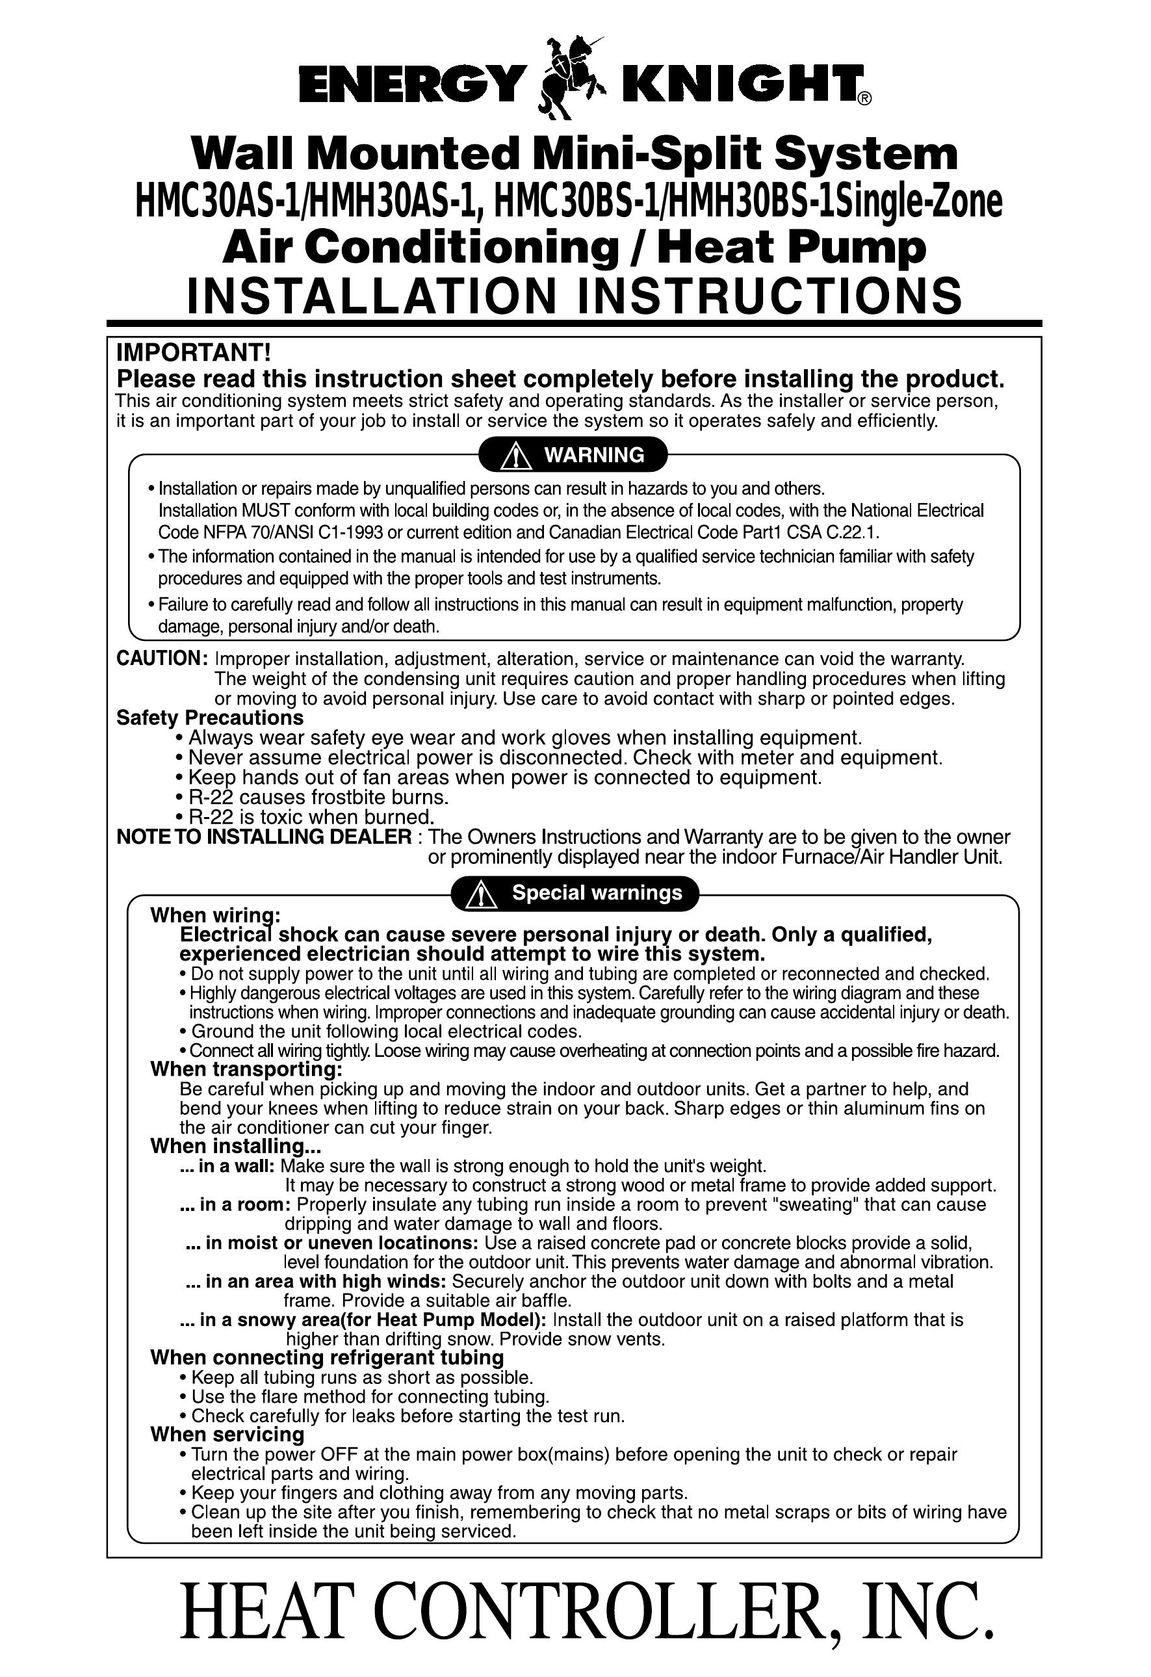 Heat Controller HMH30AS-1 Heat Pump User Manual